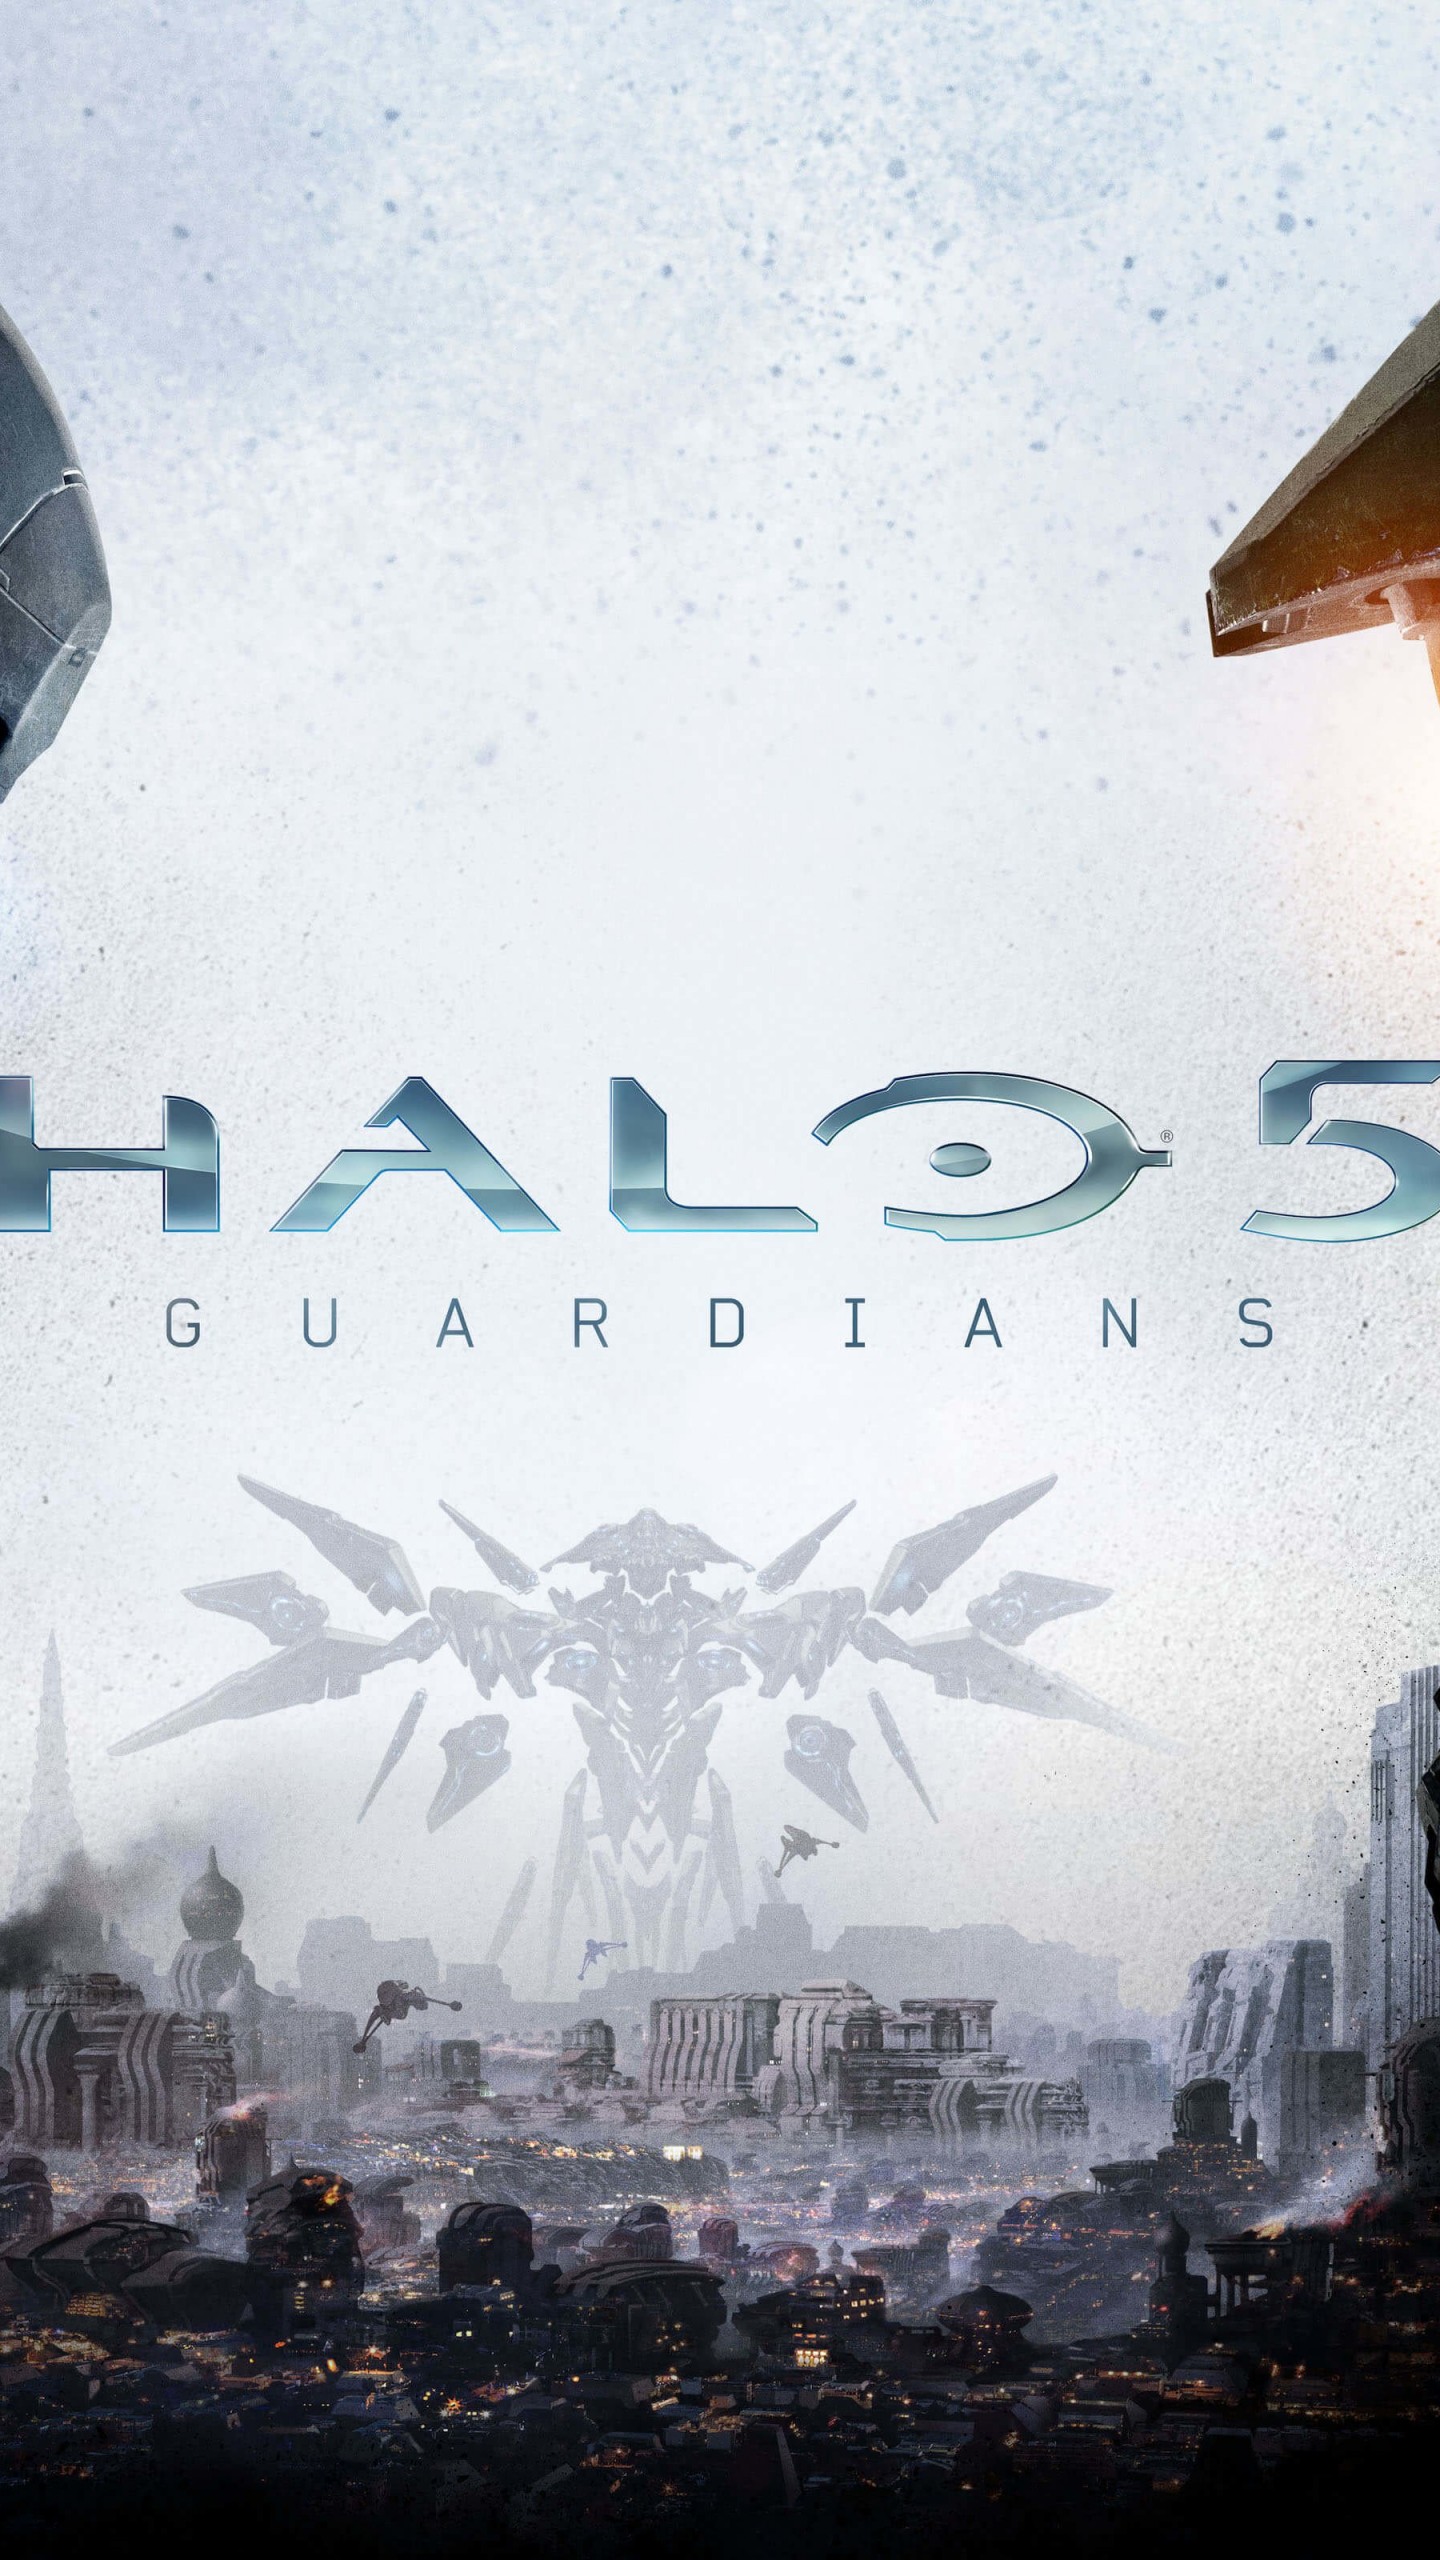 Halo 5: Guardians Wallpaper for Google Nexus 6